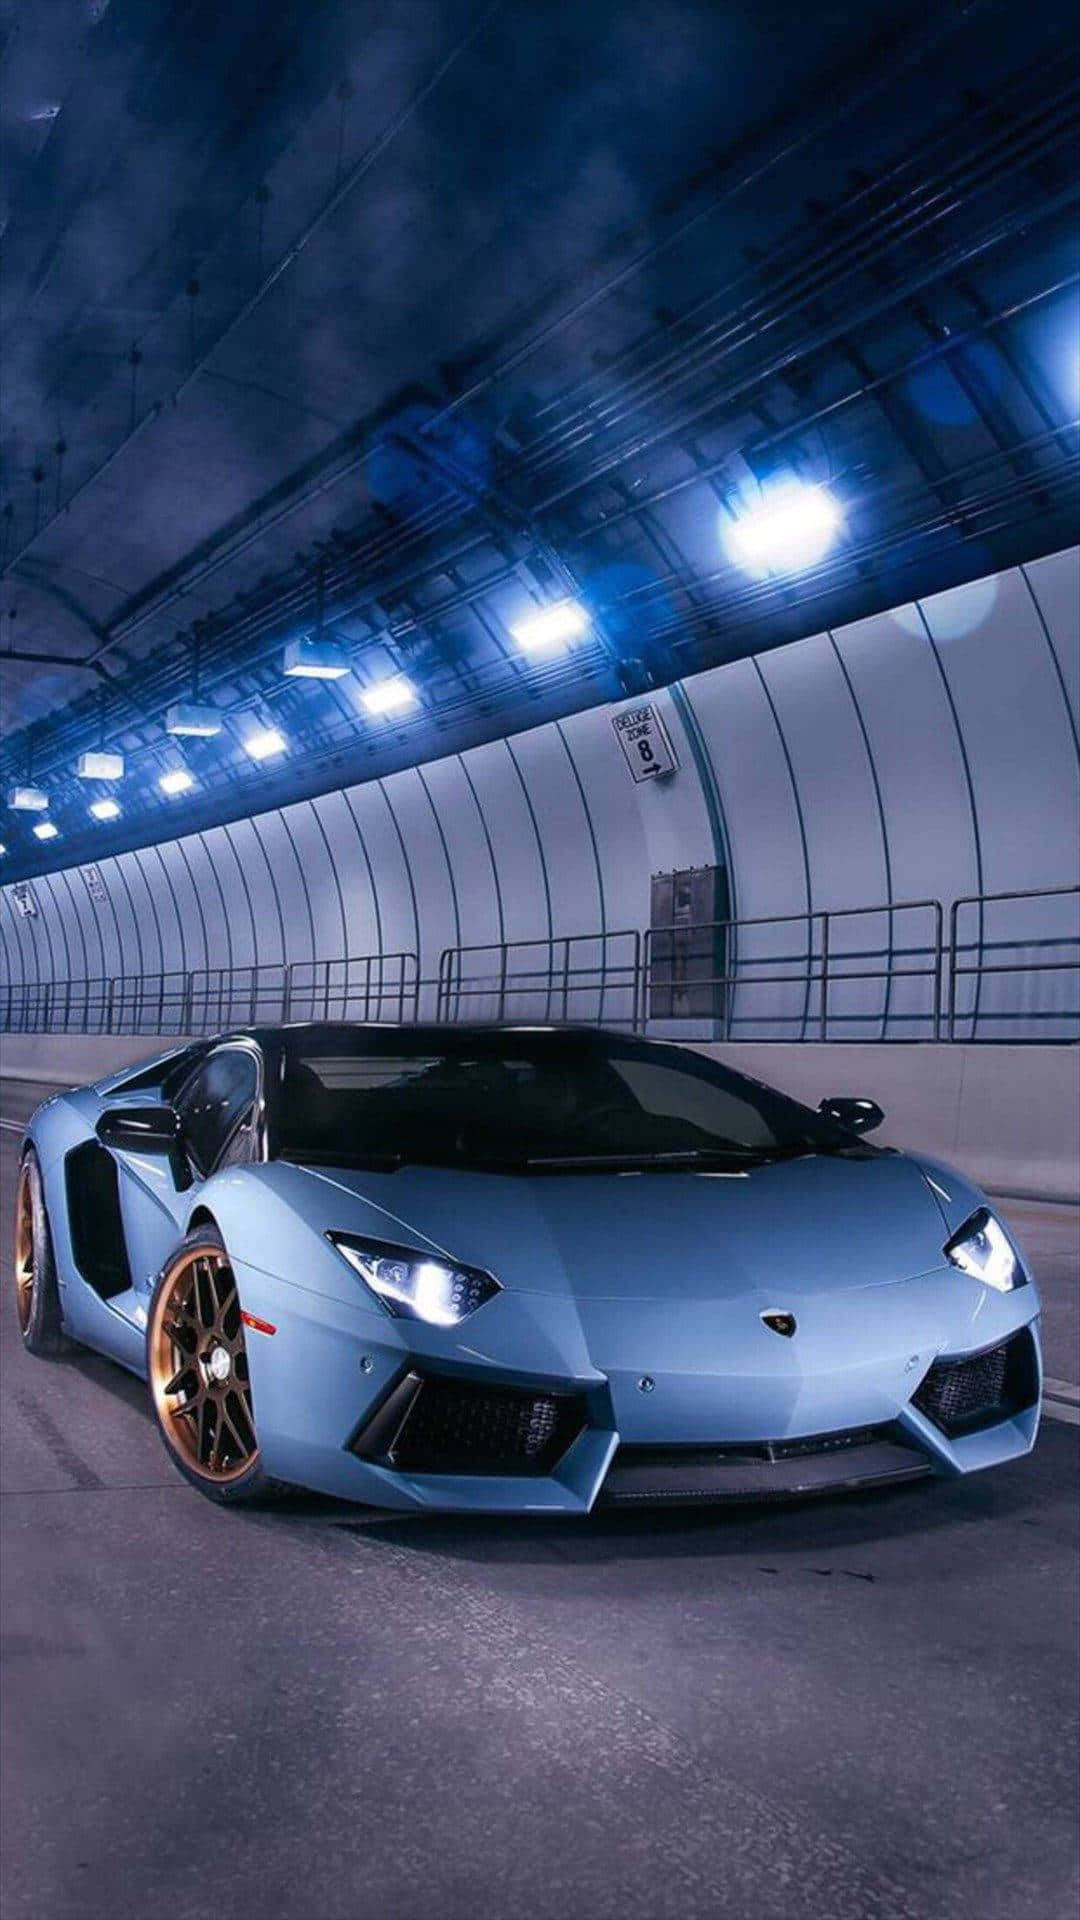 "Set the mood with this stylish blue Lamborghini&iPhone!" Wallpaper